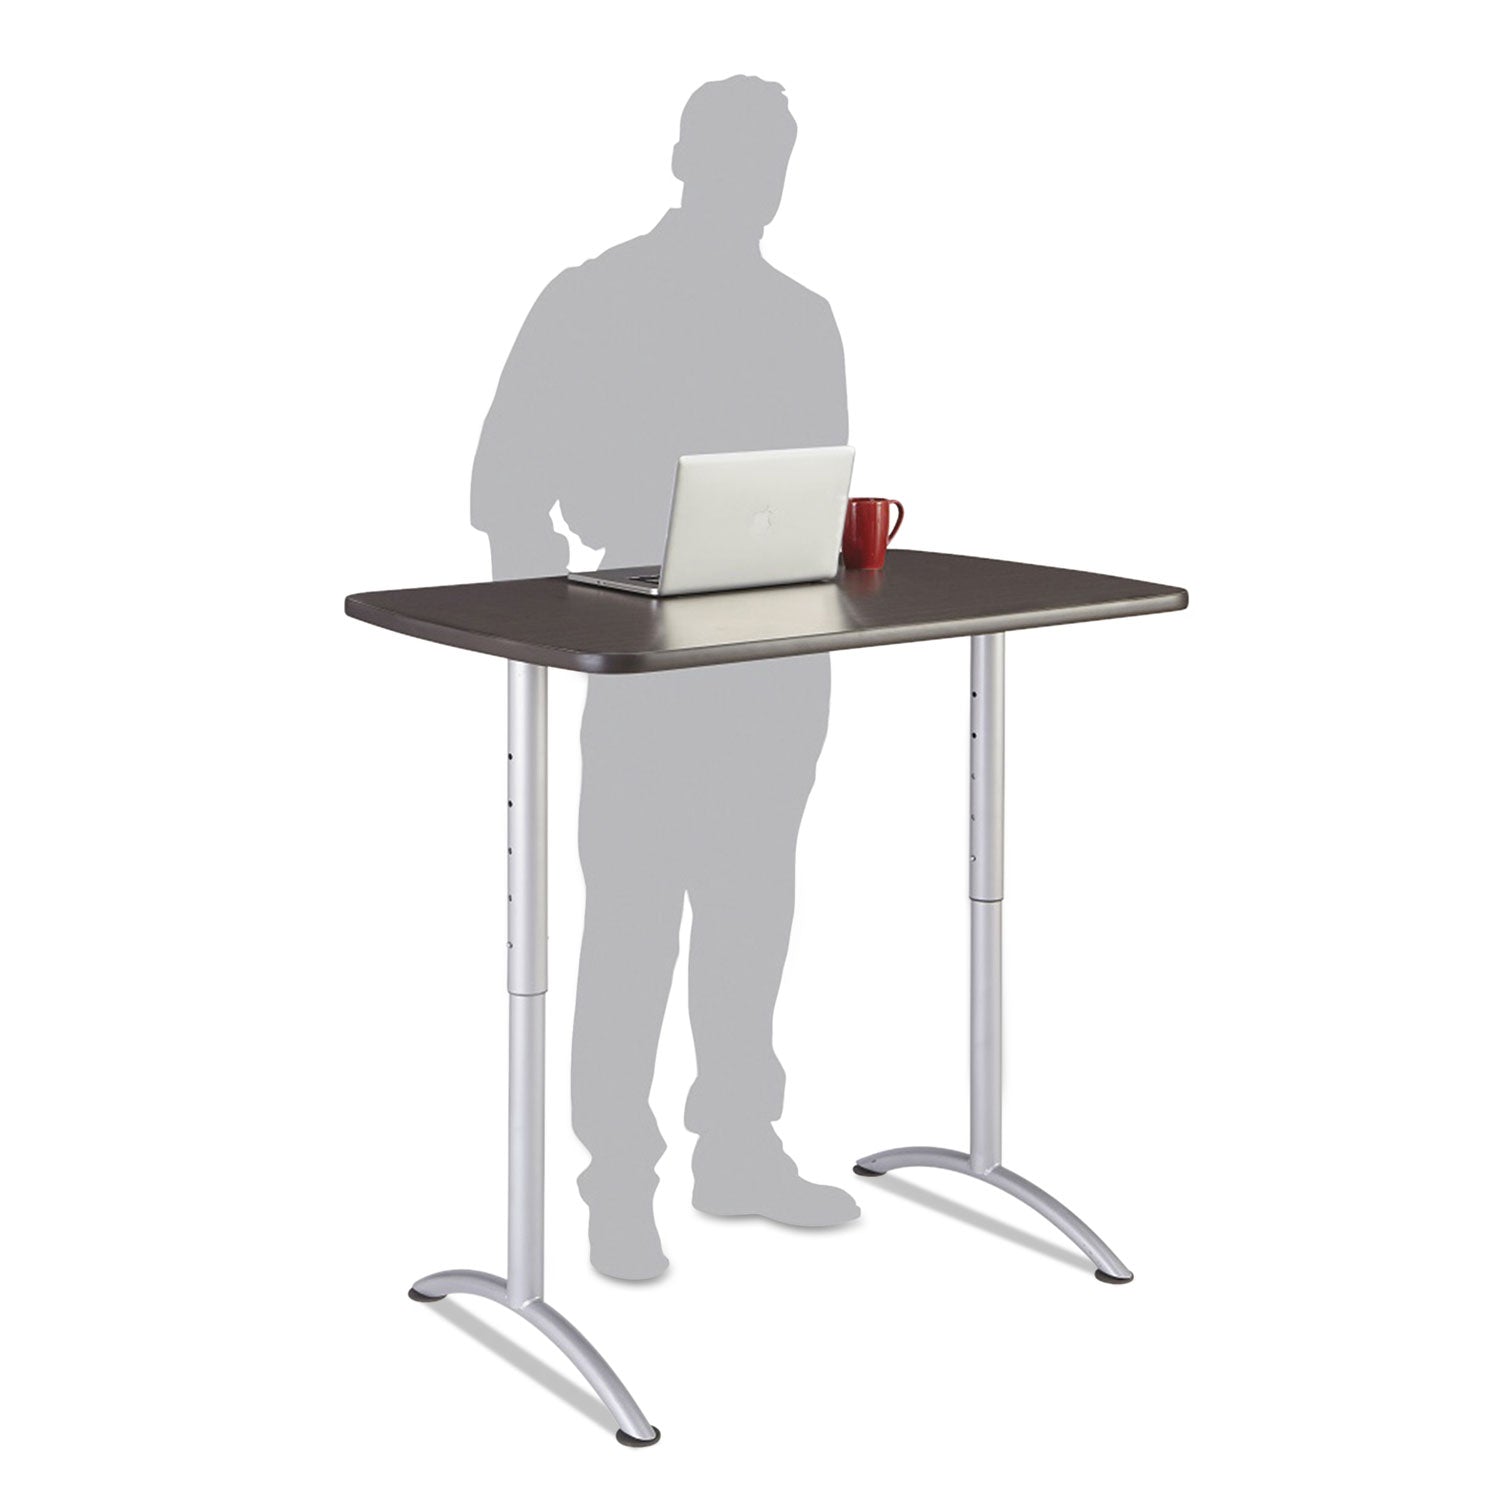 ARC Adjustable-Height Table, Rectangular, 30" x 48" x 36" to 48", Gray Walnut/Silver - 